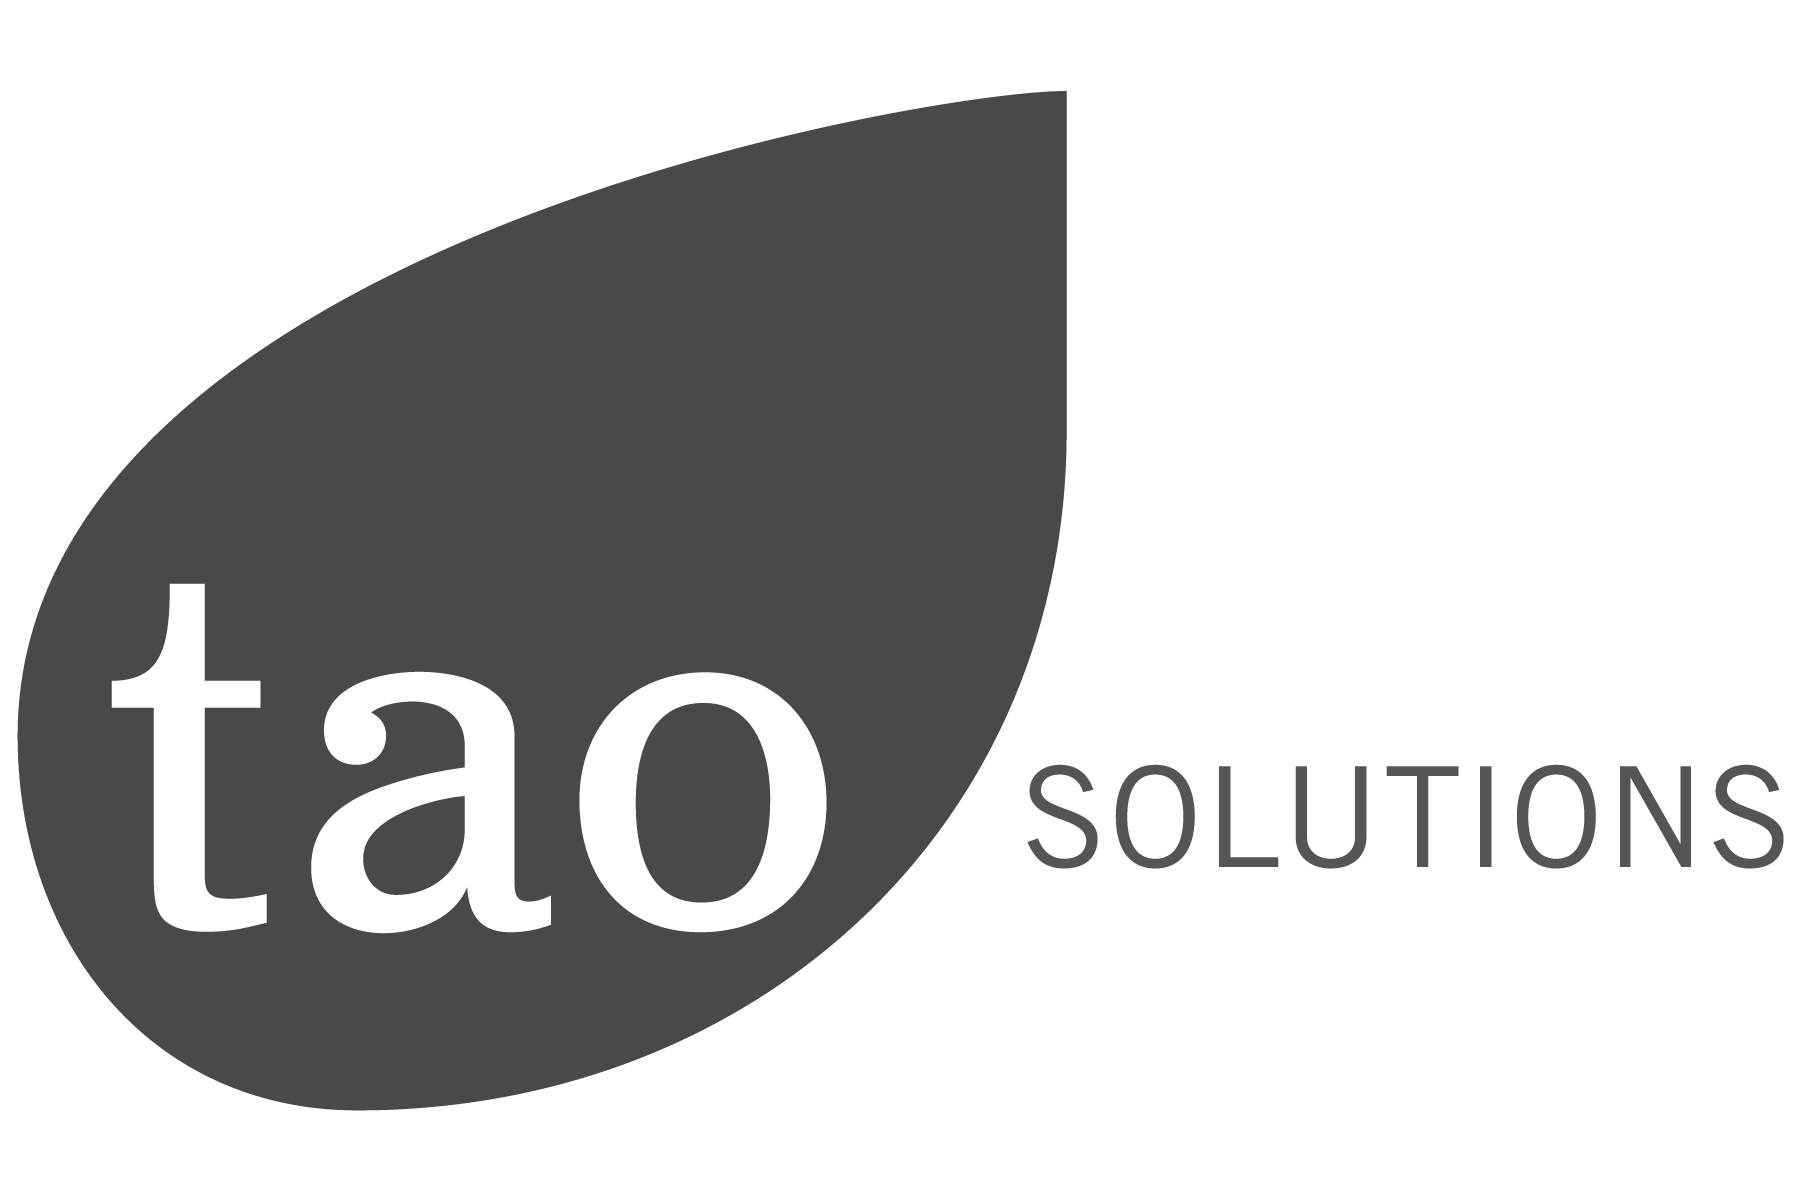 TAO Solutions Inc.